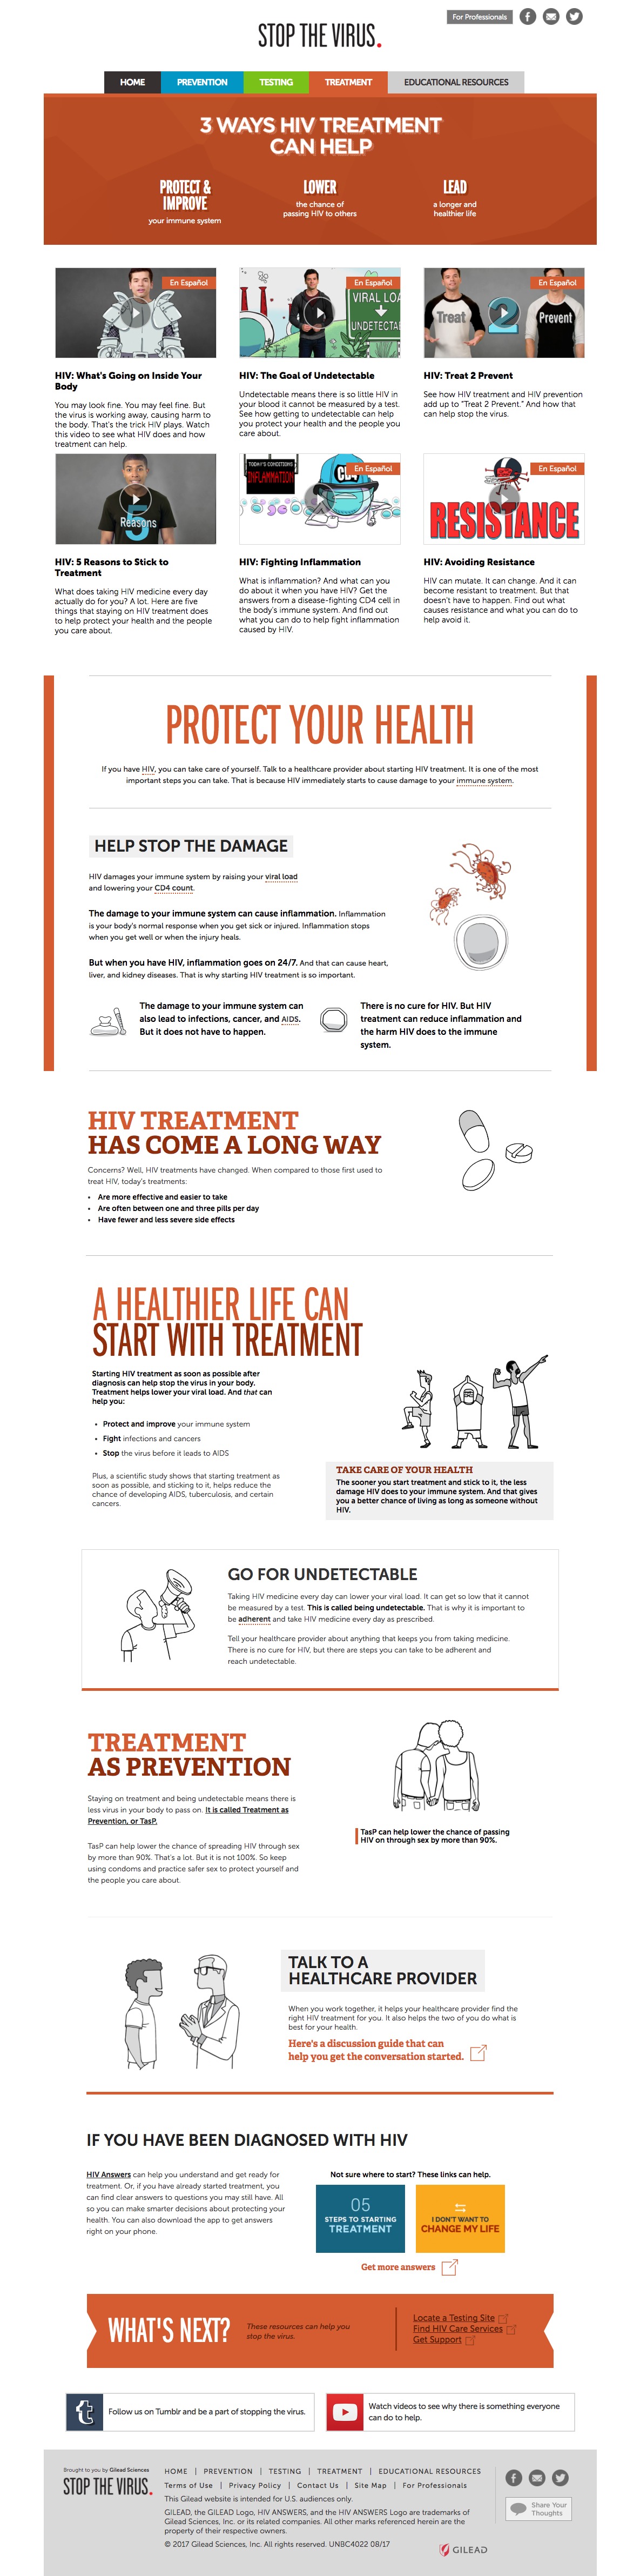 Stop The Virus - Disease Awareness Website from Gilead - Treatment